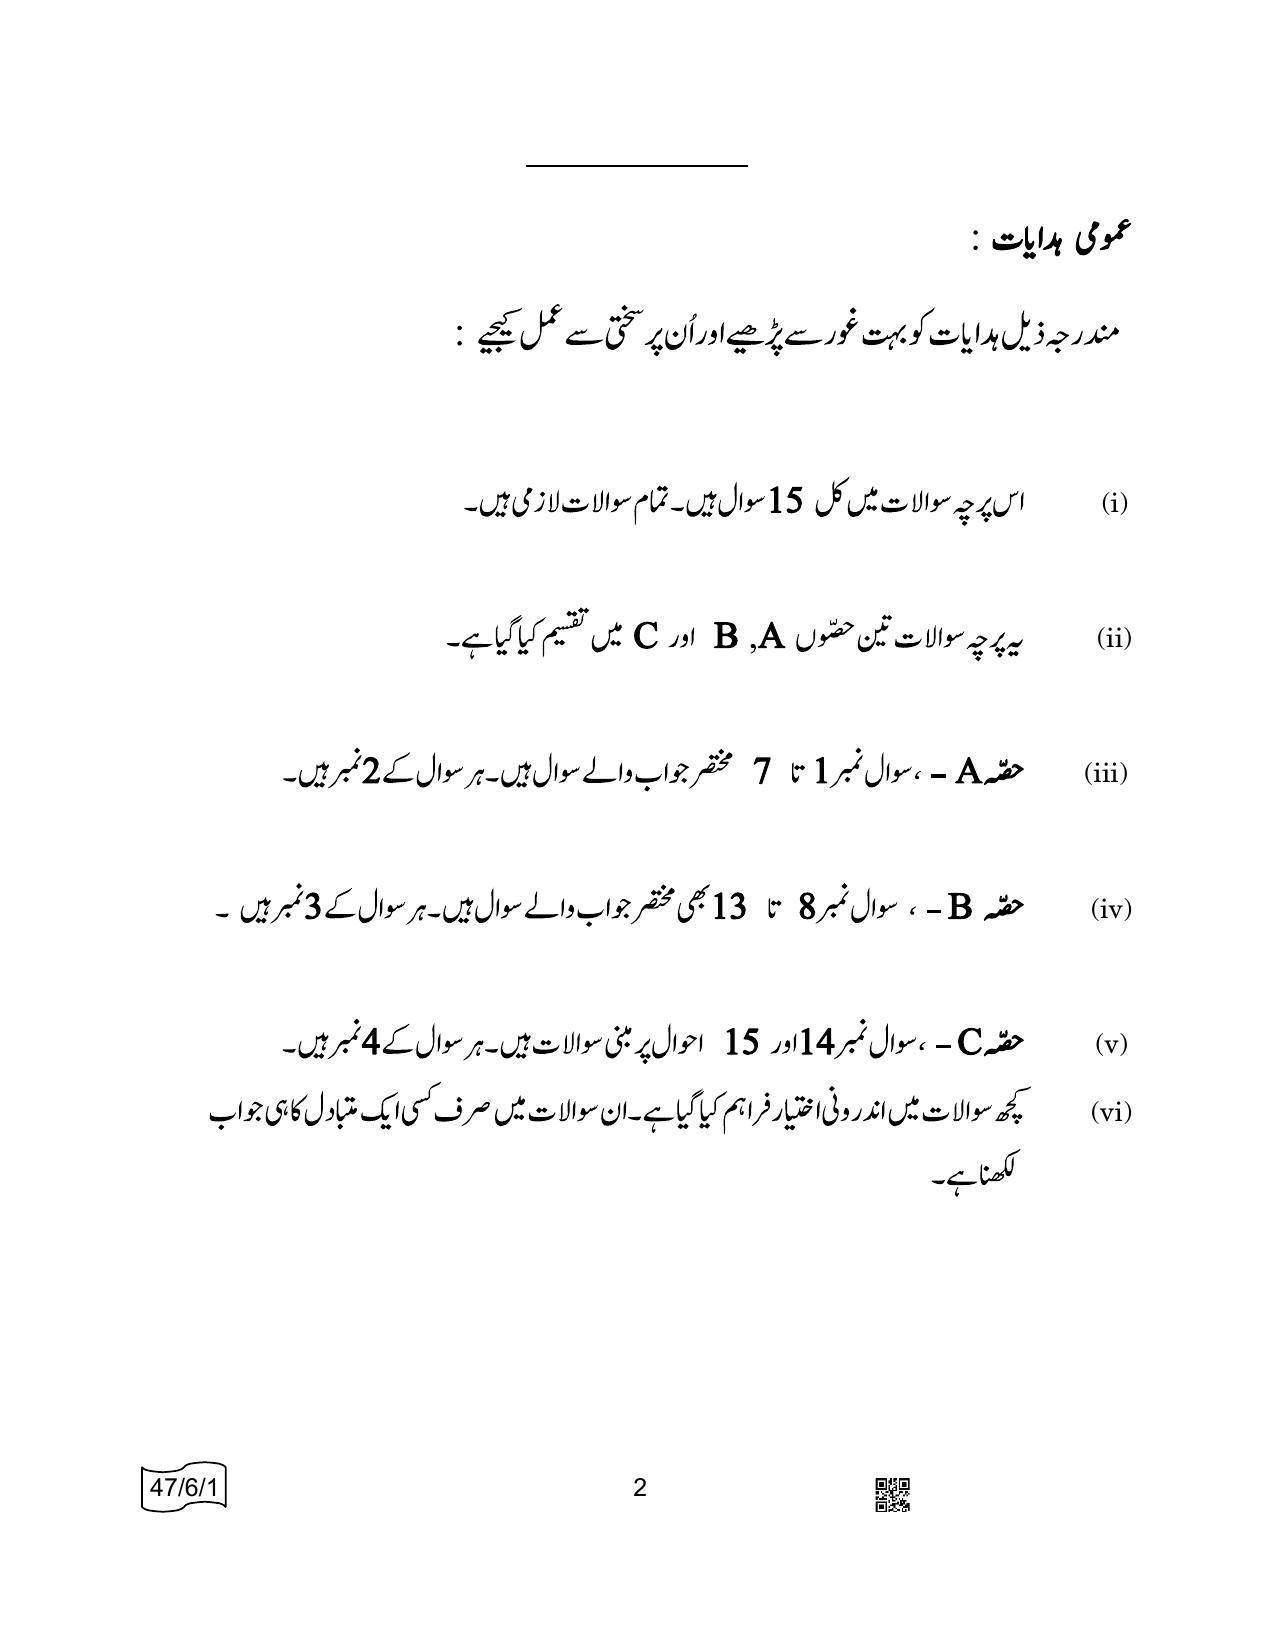 CBSE Class 10 47-6-1 SCIENCE Urdu 2022 Compartment Question Paper - Page 2